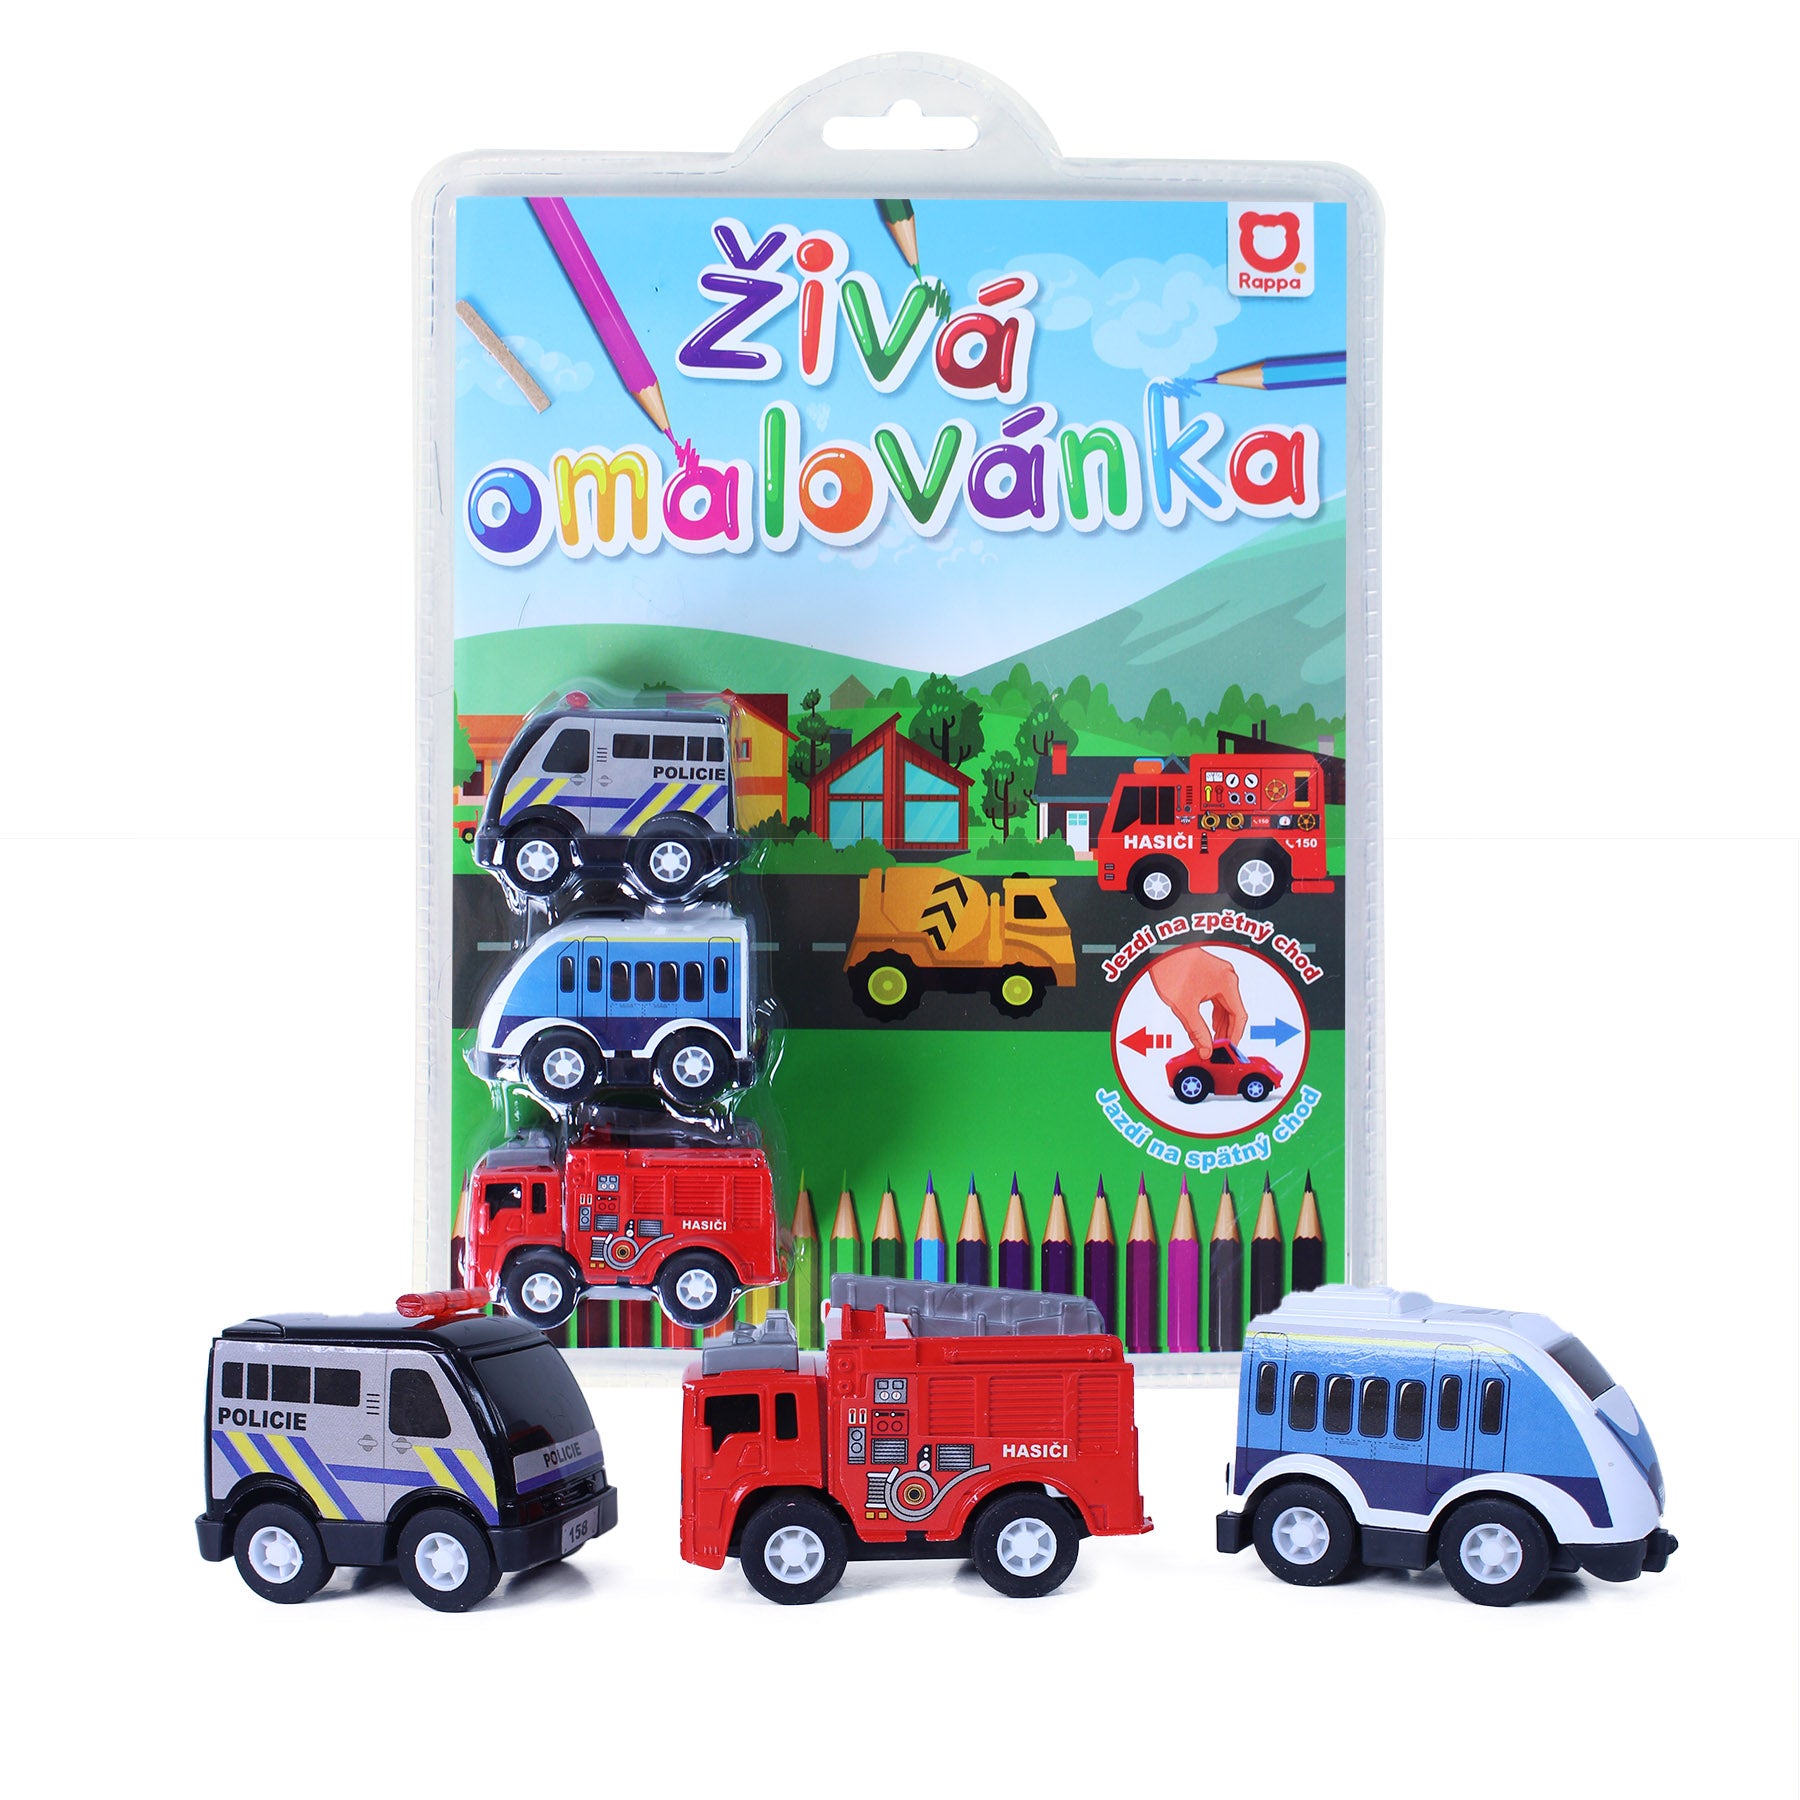 Ziva omalovanka auta 3 ks | Czech Toys | czechmovie